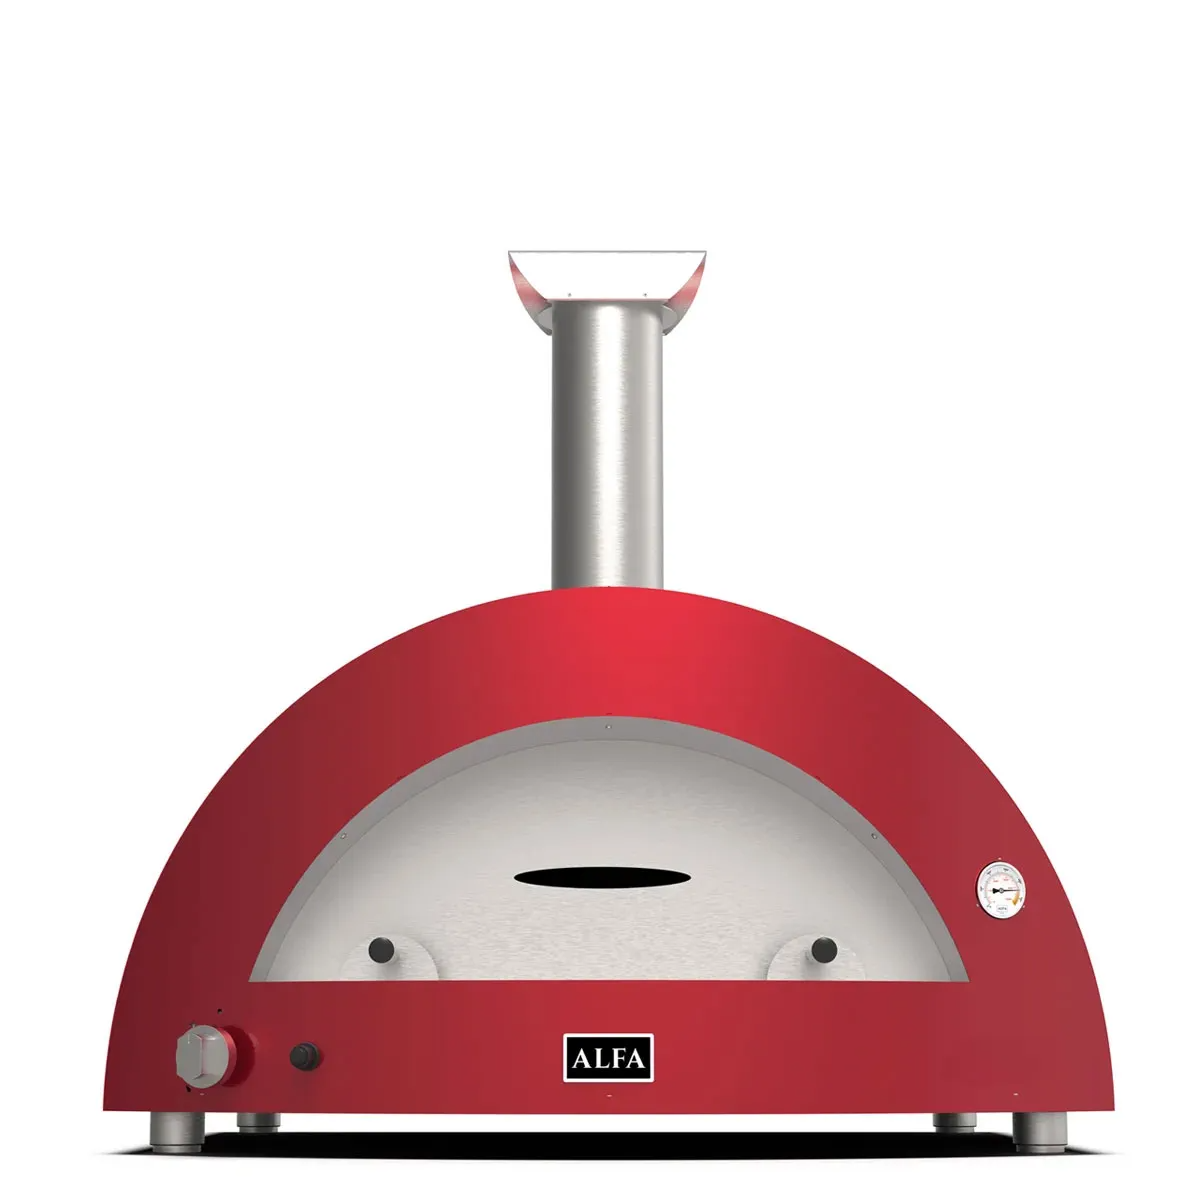 Alfa Moderno 5 Pizze Natural Gas Countertop Outdoor Pizza Oven - Antique Red